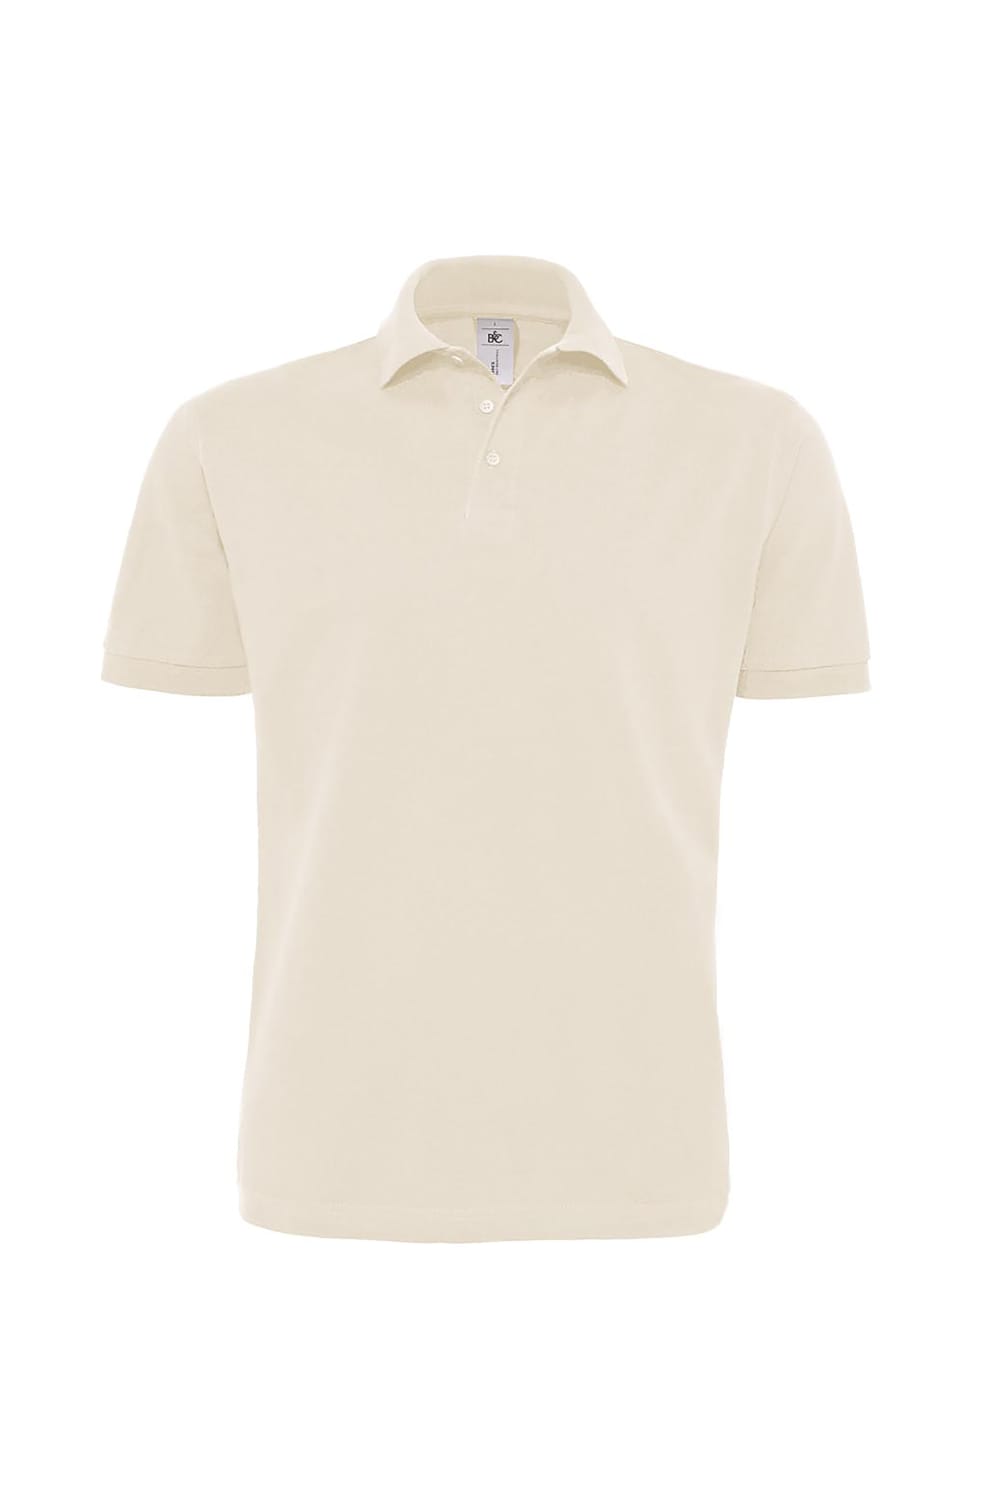 B&C Mens Heavymill Short Sleeve Cotton Polo Shirt (Natural)